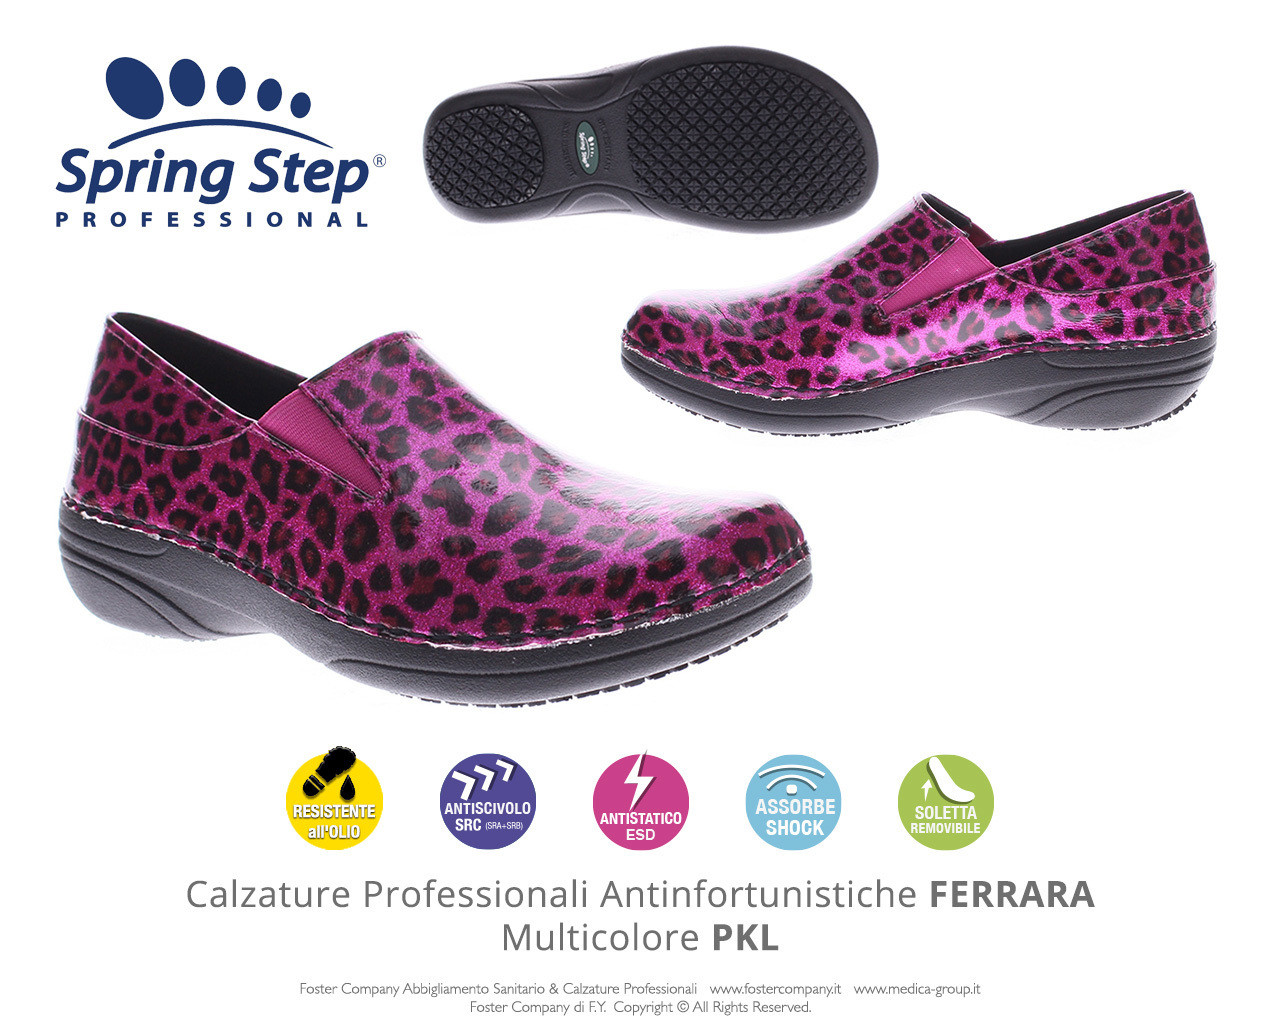 Calzature Professionali Spring Step FERRARA Multicolore PKL - FINE SERIE